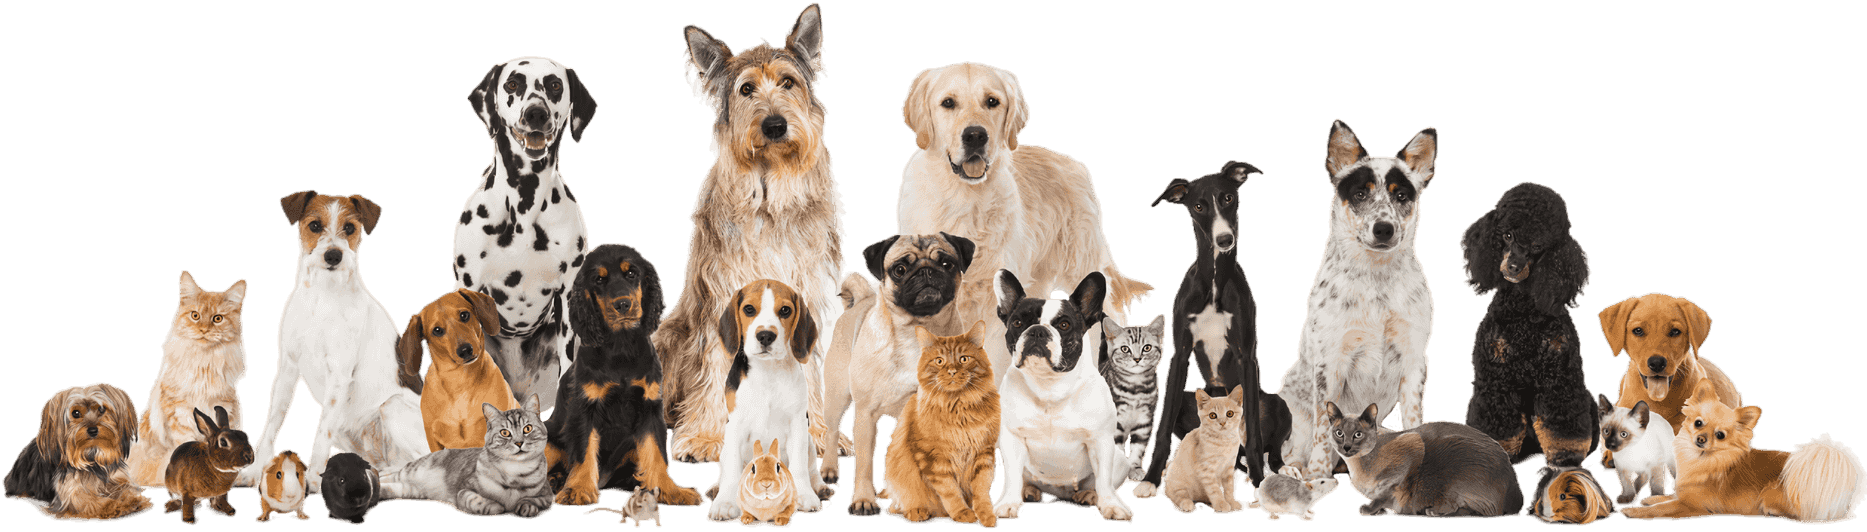 The Pet Grooming Studio LLC | Dog & Cat Grooming in Burlington County NJ